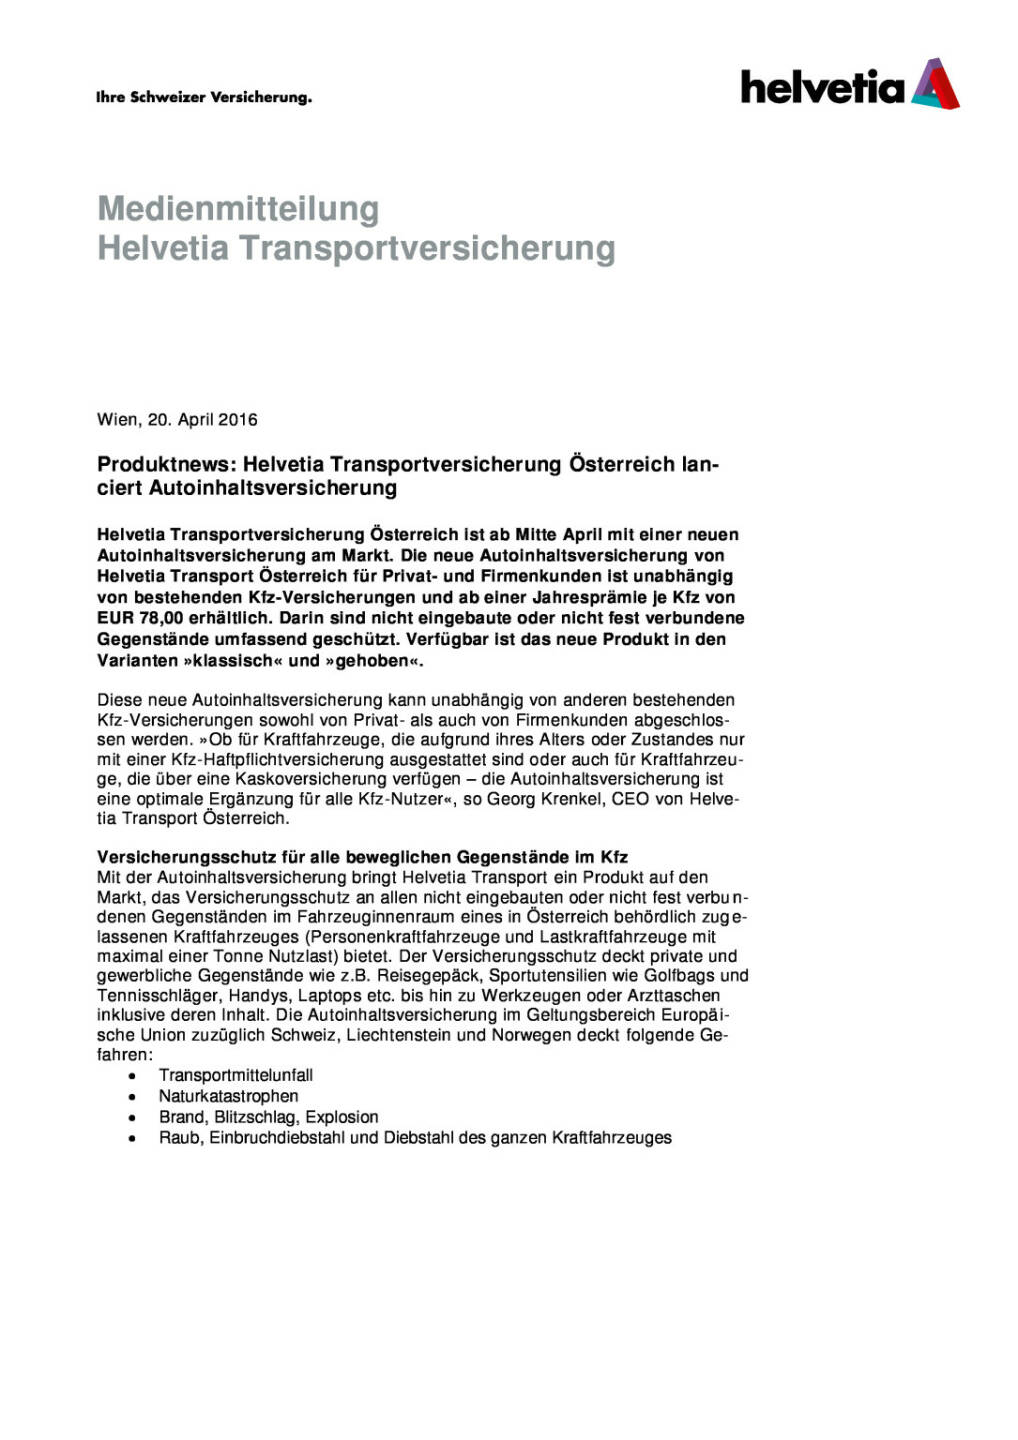 Helvetia Transportversicherung Österreich lanciert Autoinhaltsversicherung, Seite 1/2, komplettes Dokument unter http://boerse-social.com/static/uploads/file_917_helvetia_transportversicherung_osterreich_lanciert_autoinhaltsversicherung.pdf